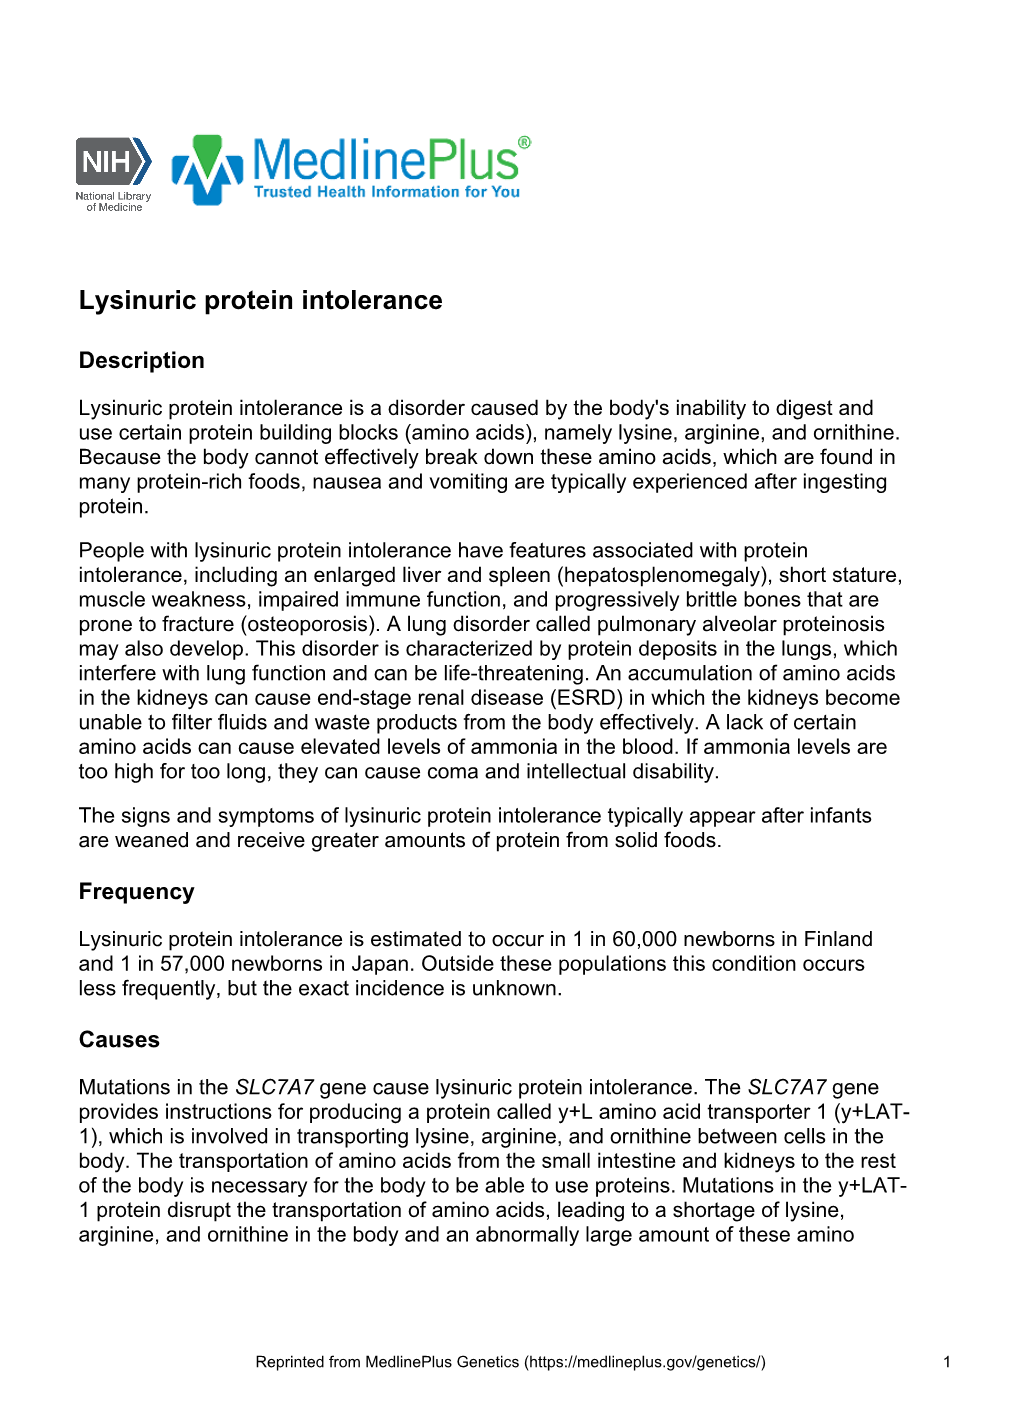 Lysinuric Protein Intolerance